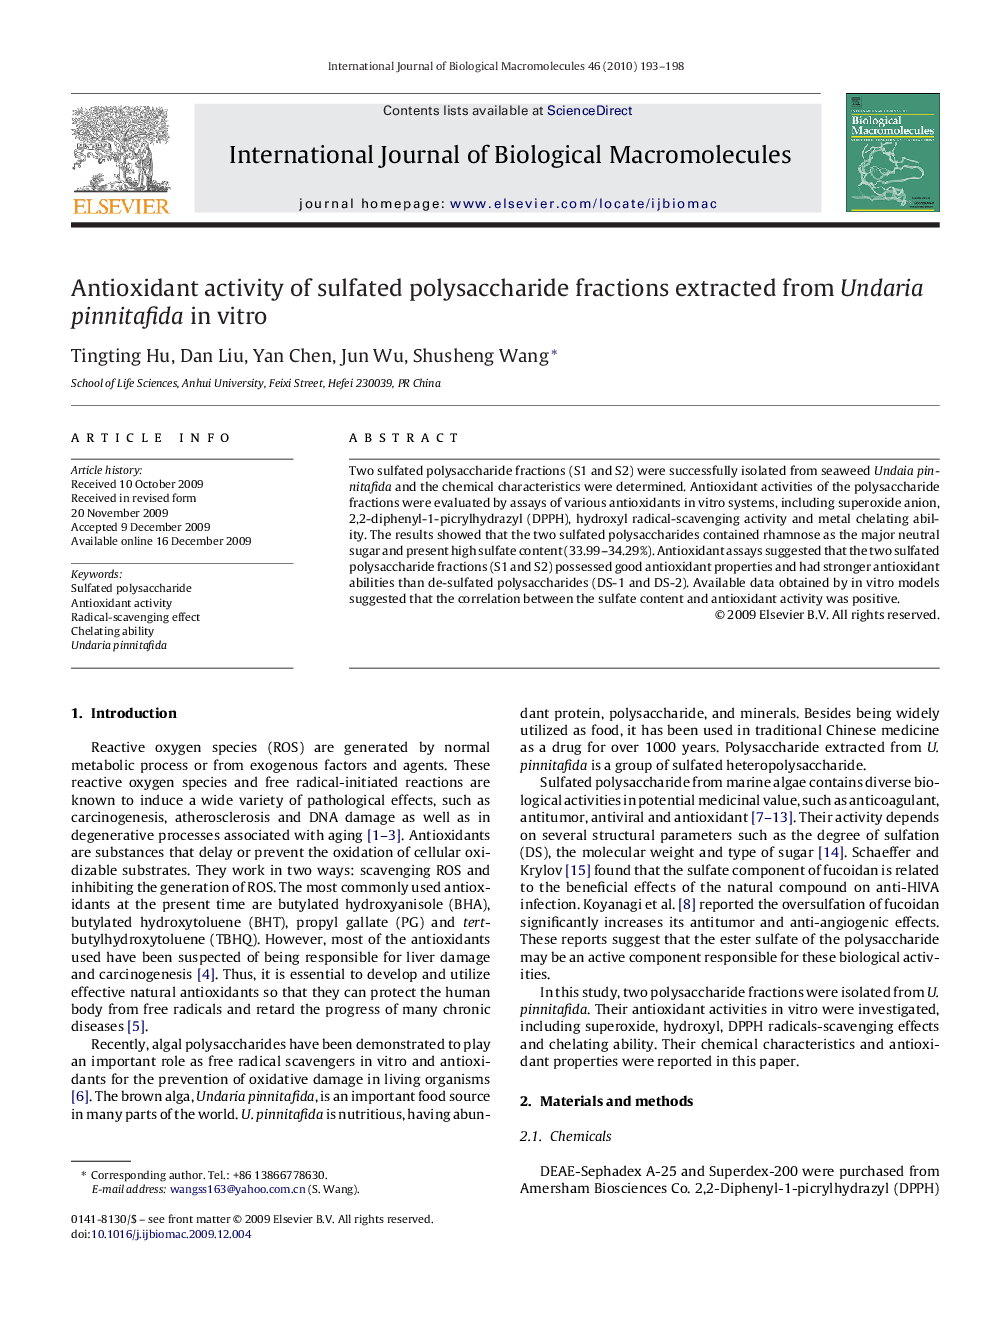 Antioxidant activity of sulfated polysaccharide fractions extracted from Undaria pinnitafida in vitro